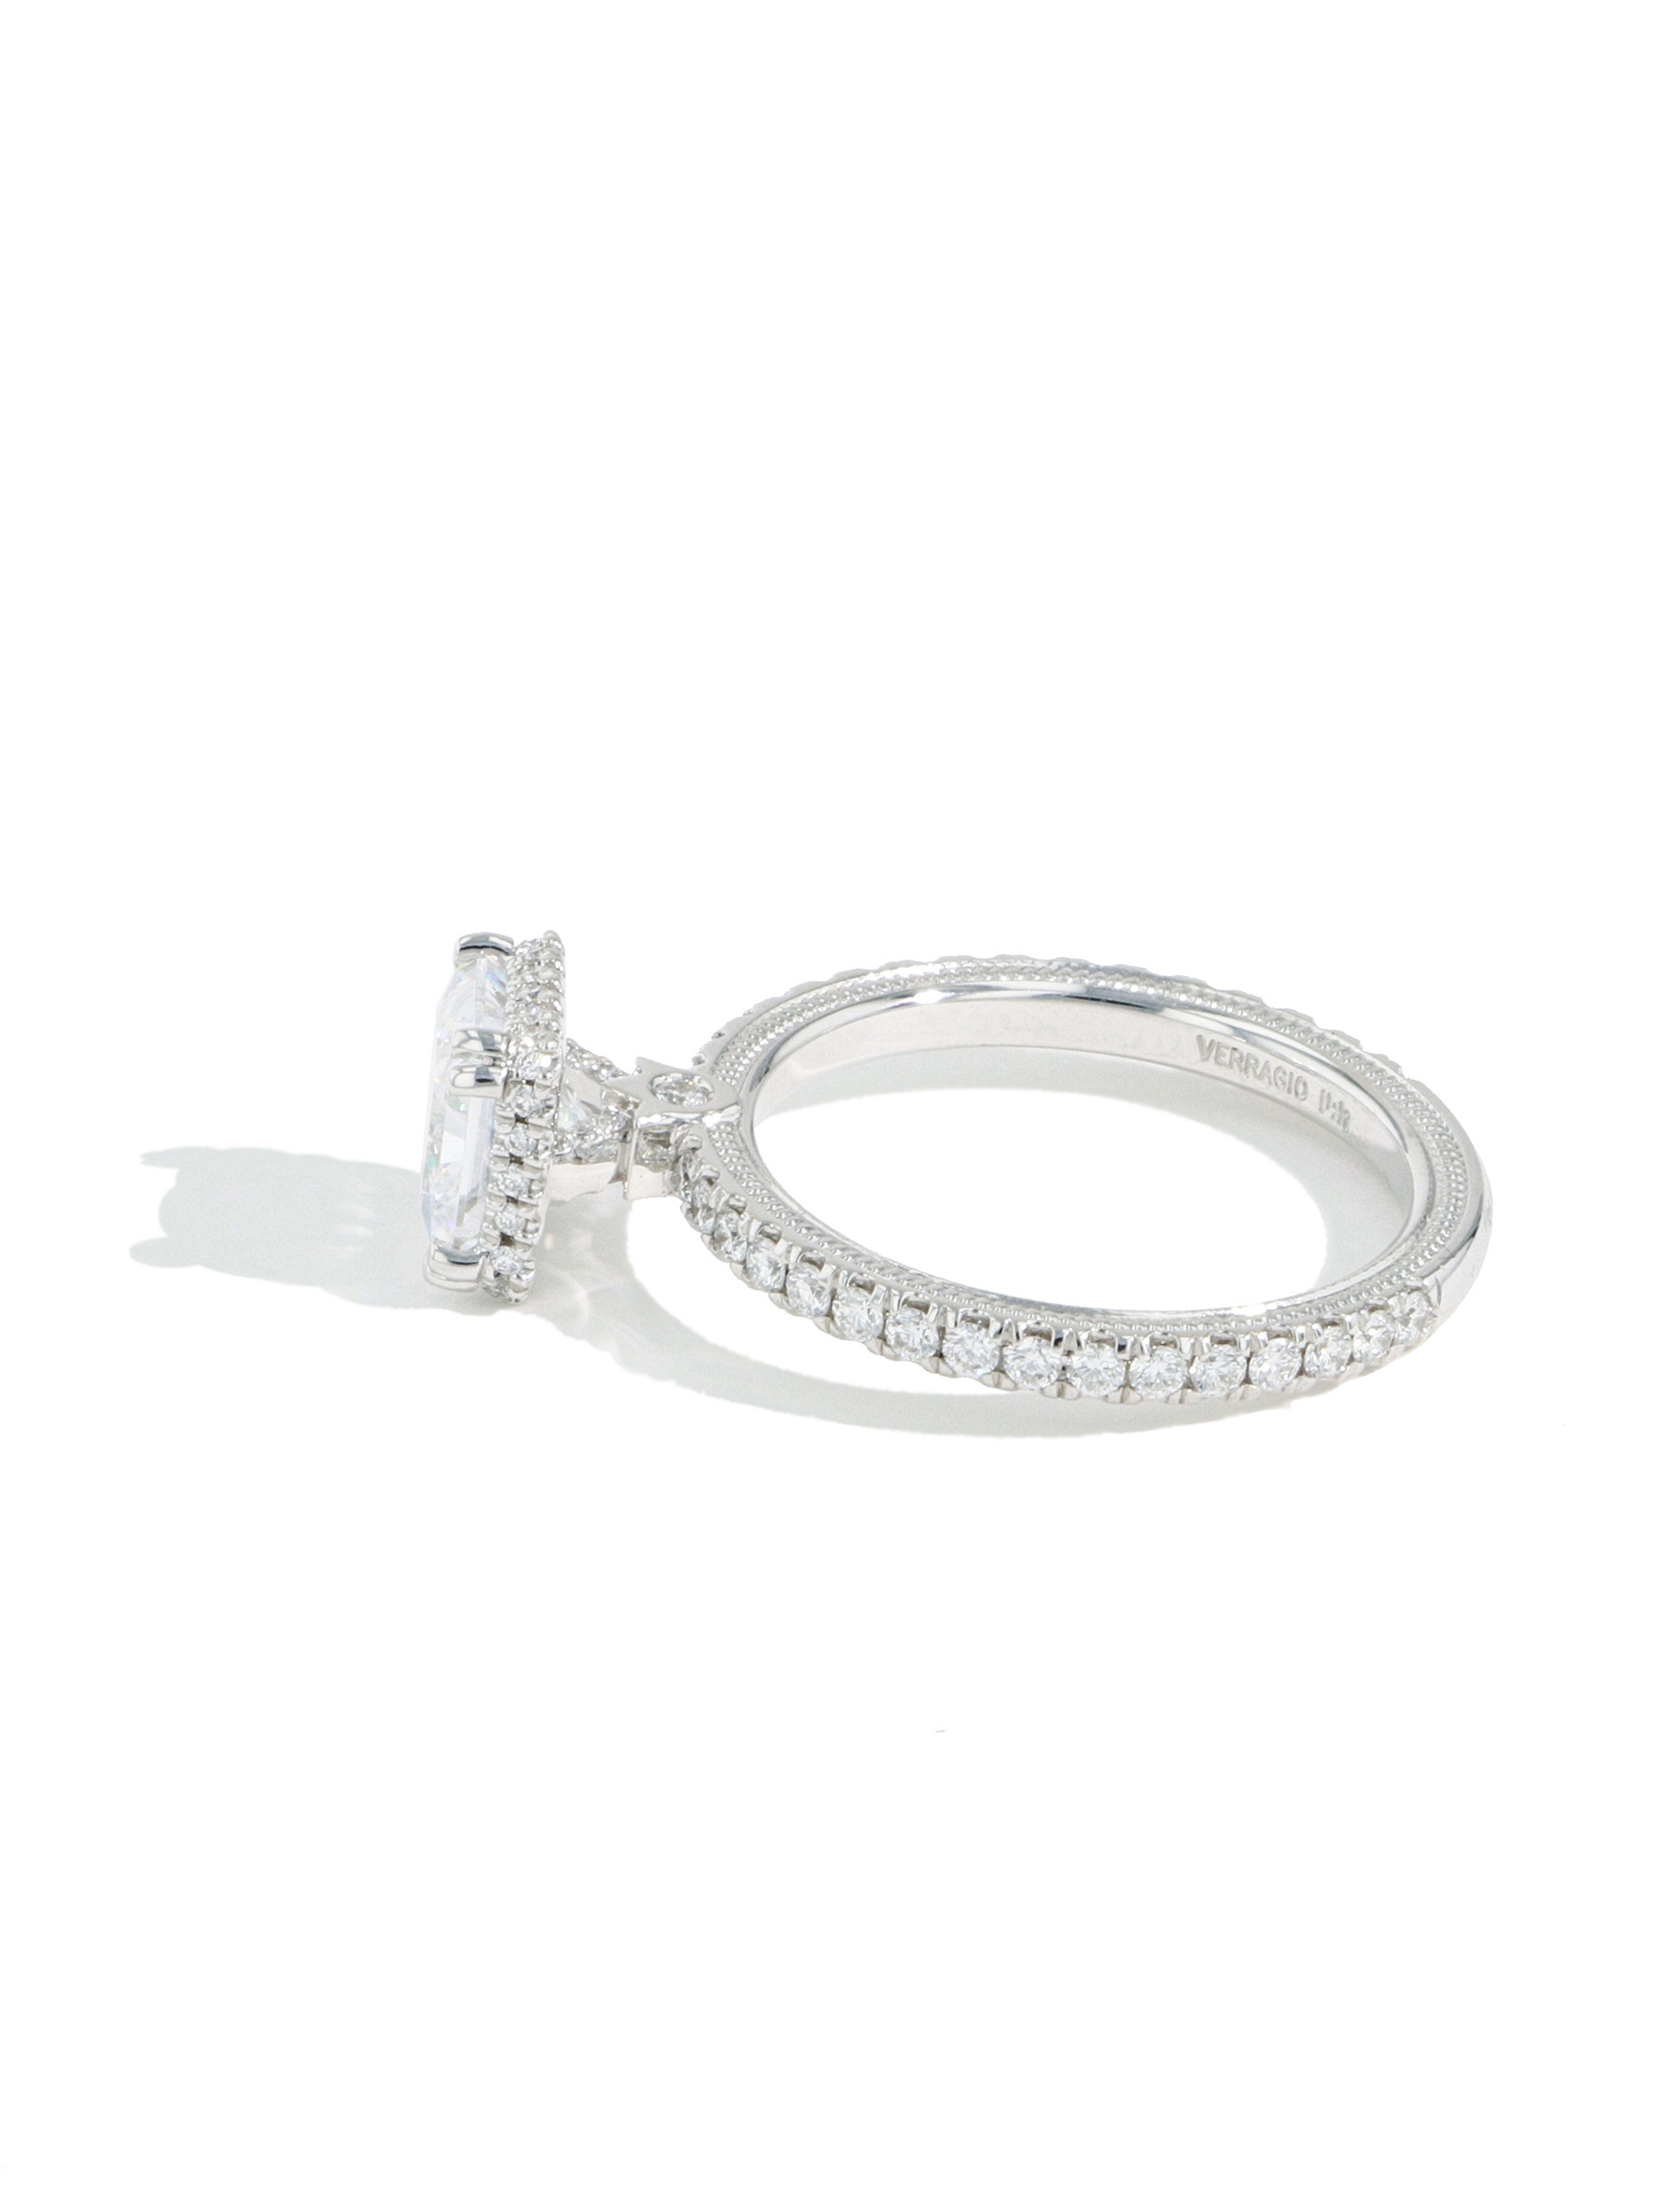 Verragio Tradition Hidden Halo Princess Diamond Engagement Ring Setting side view